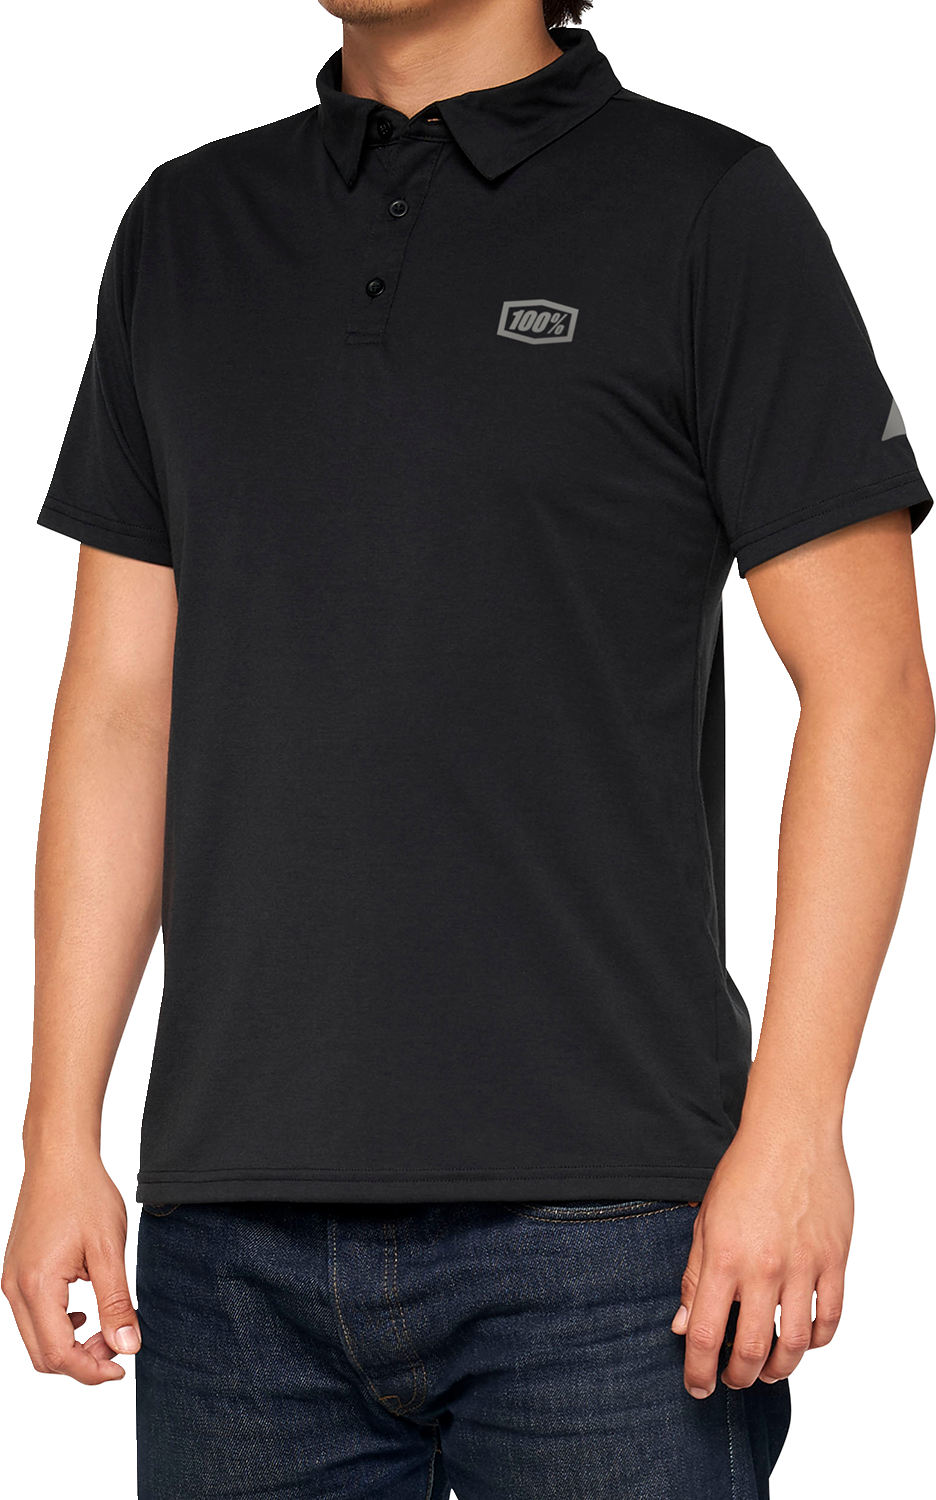 100% Corpo Polo Shirt - Black/Gray - Small 35019-057-10